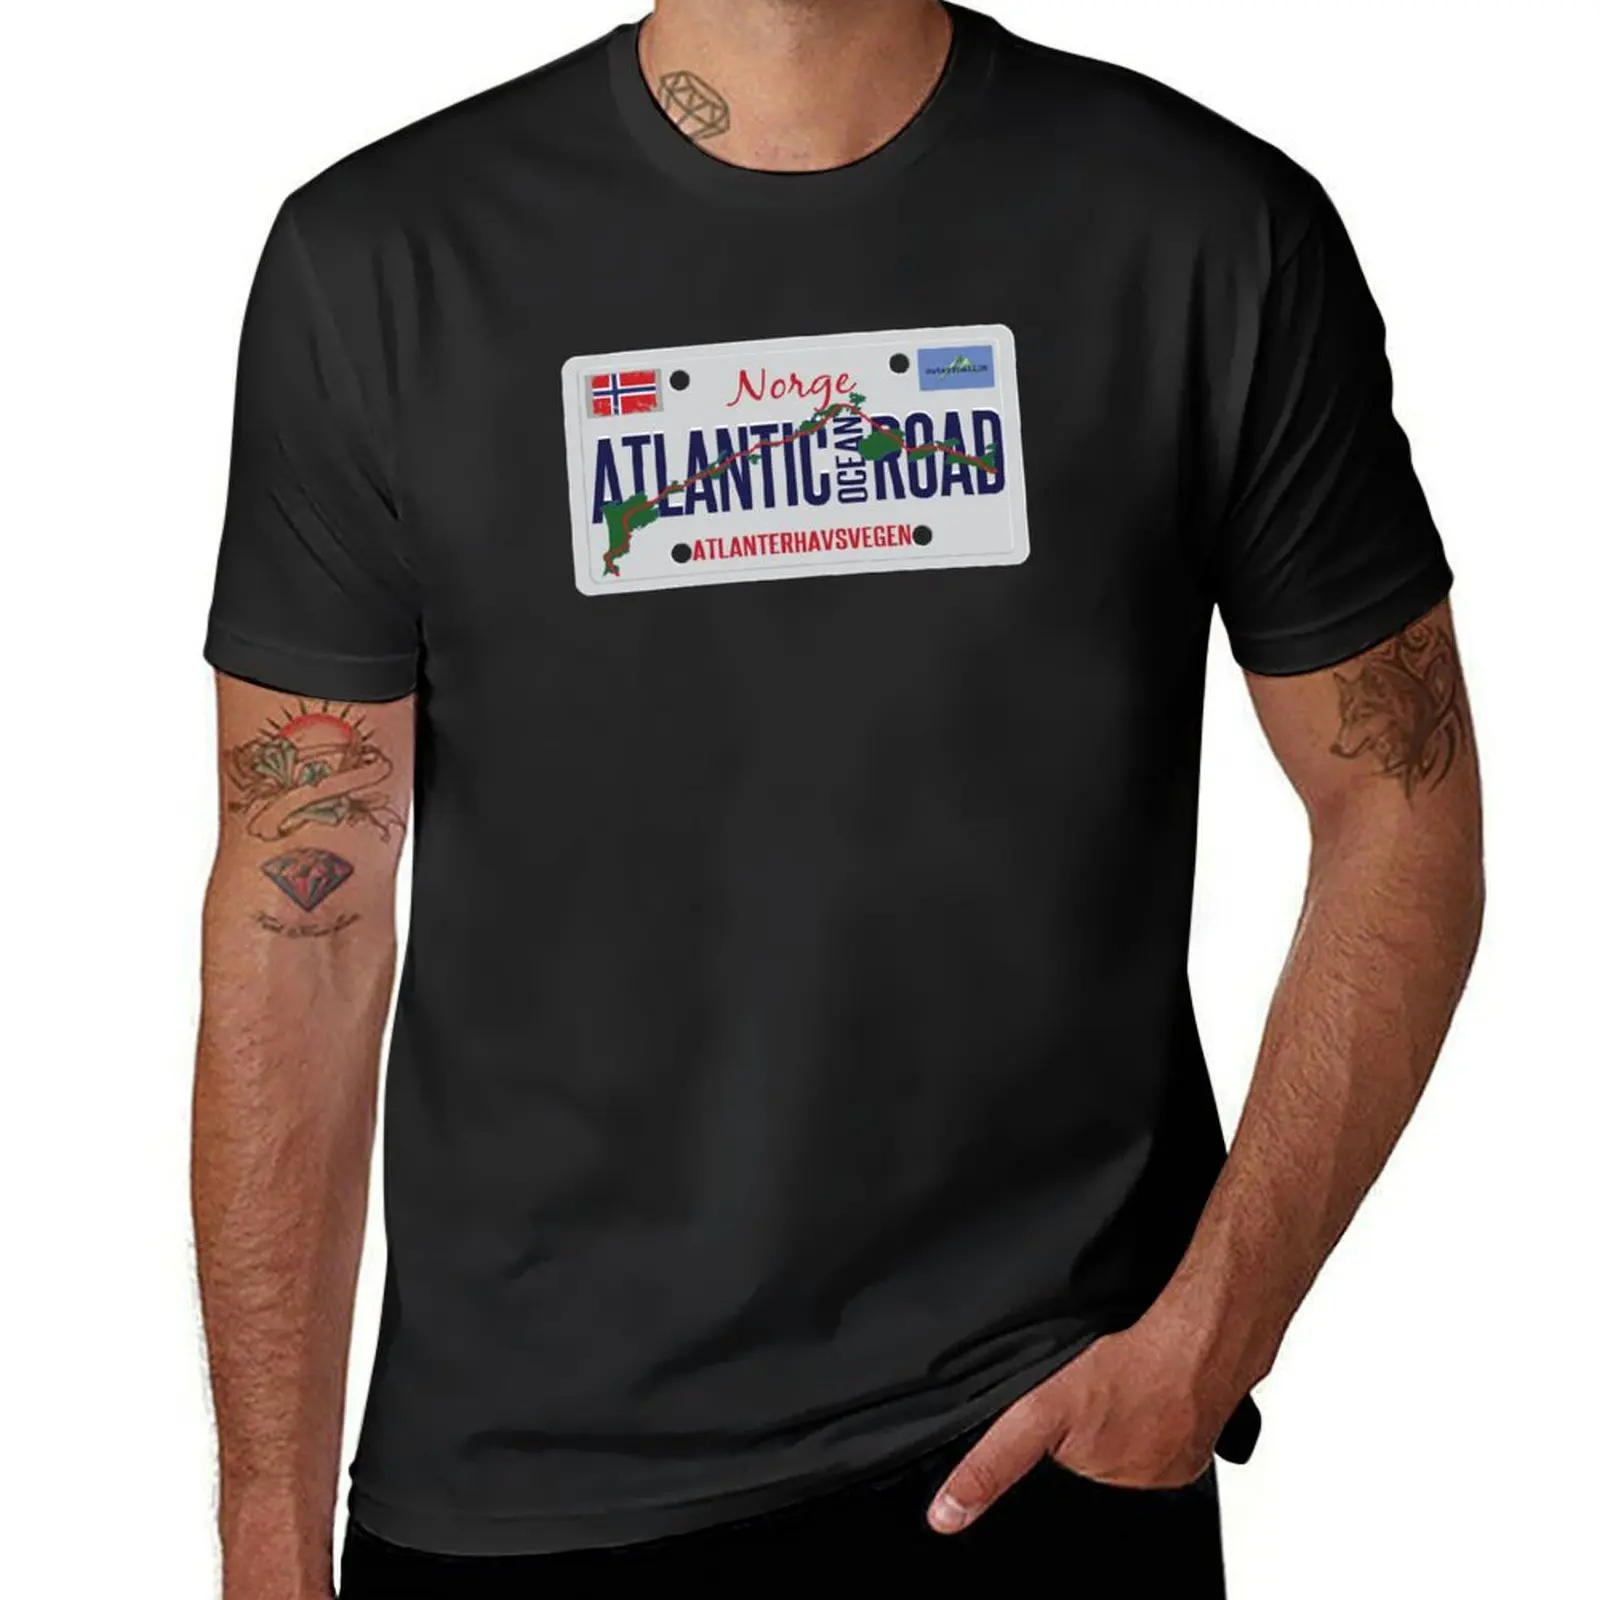 Atlantic Ocean Road norvegia Atlanterhavsvegen Sticker t-shirt 04 t-shirt camicetta mens champion t-shirt